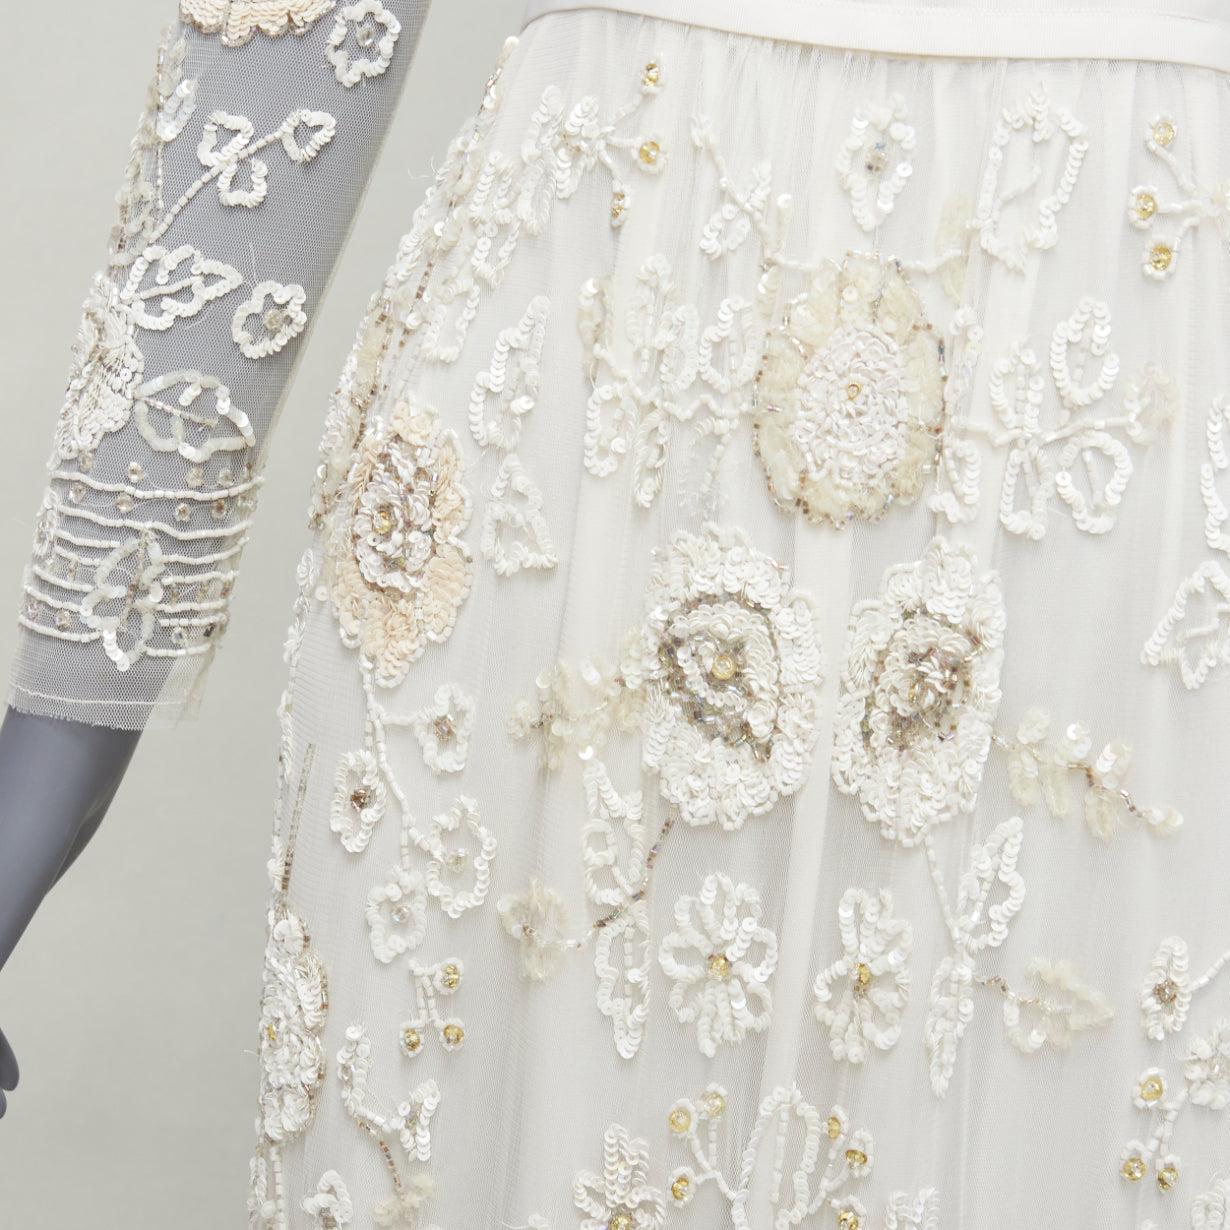 NEEDLE & THREAD Bridal white silver beads embellish chiffon overlay gown UK6 XS 3